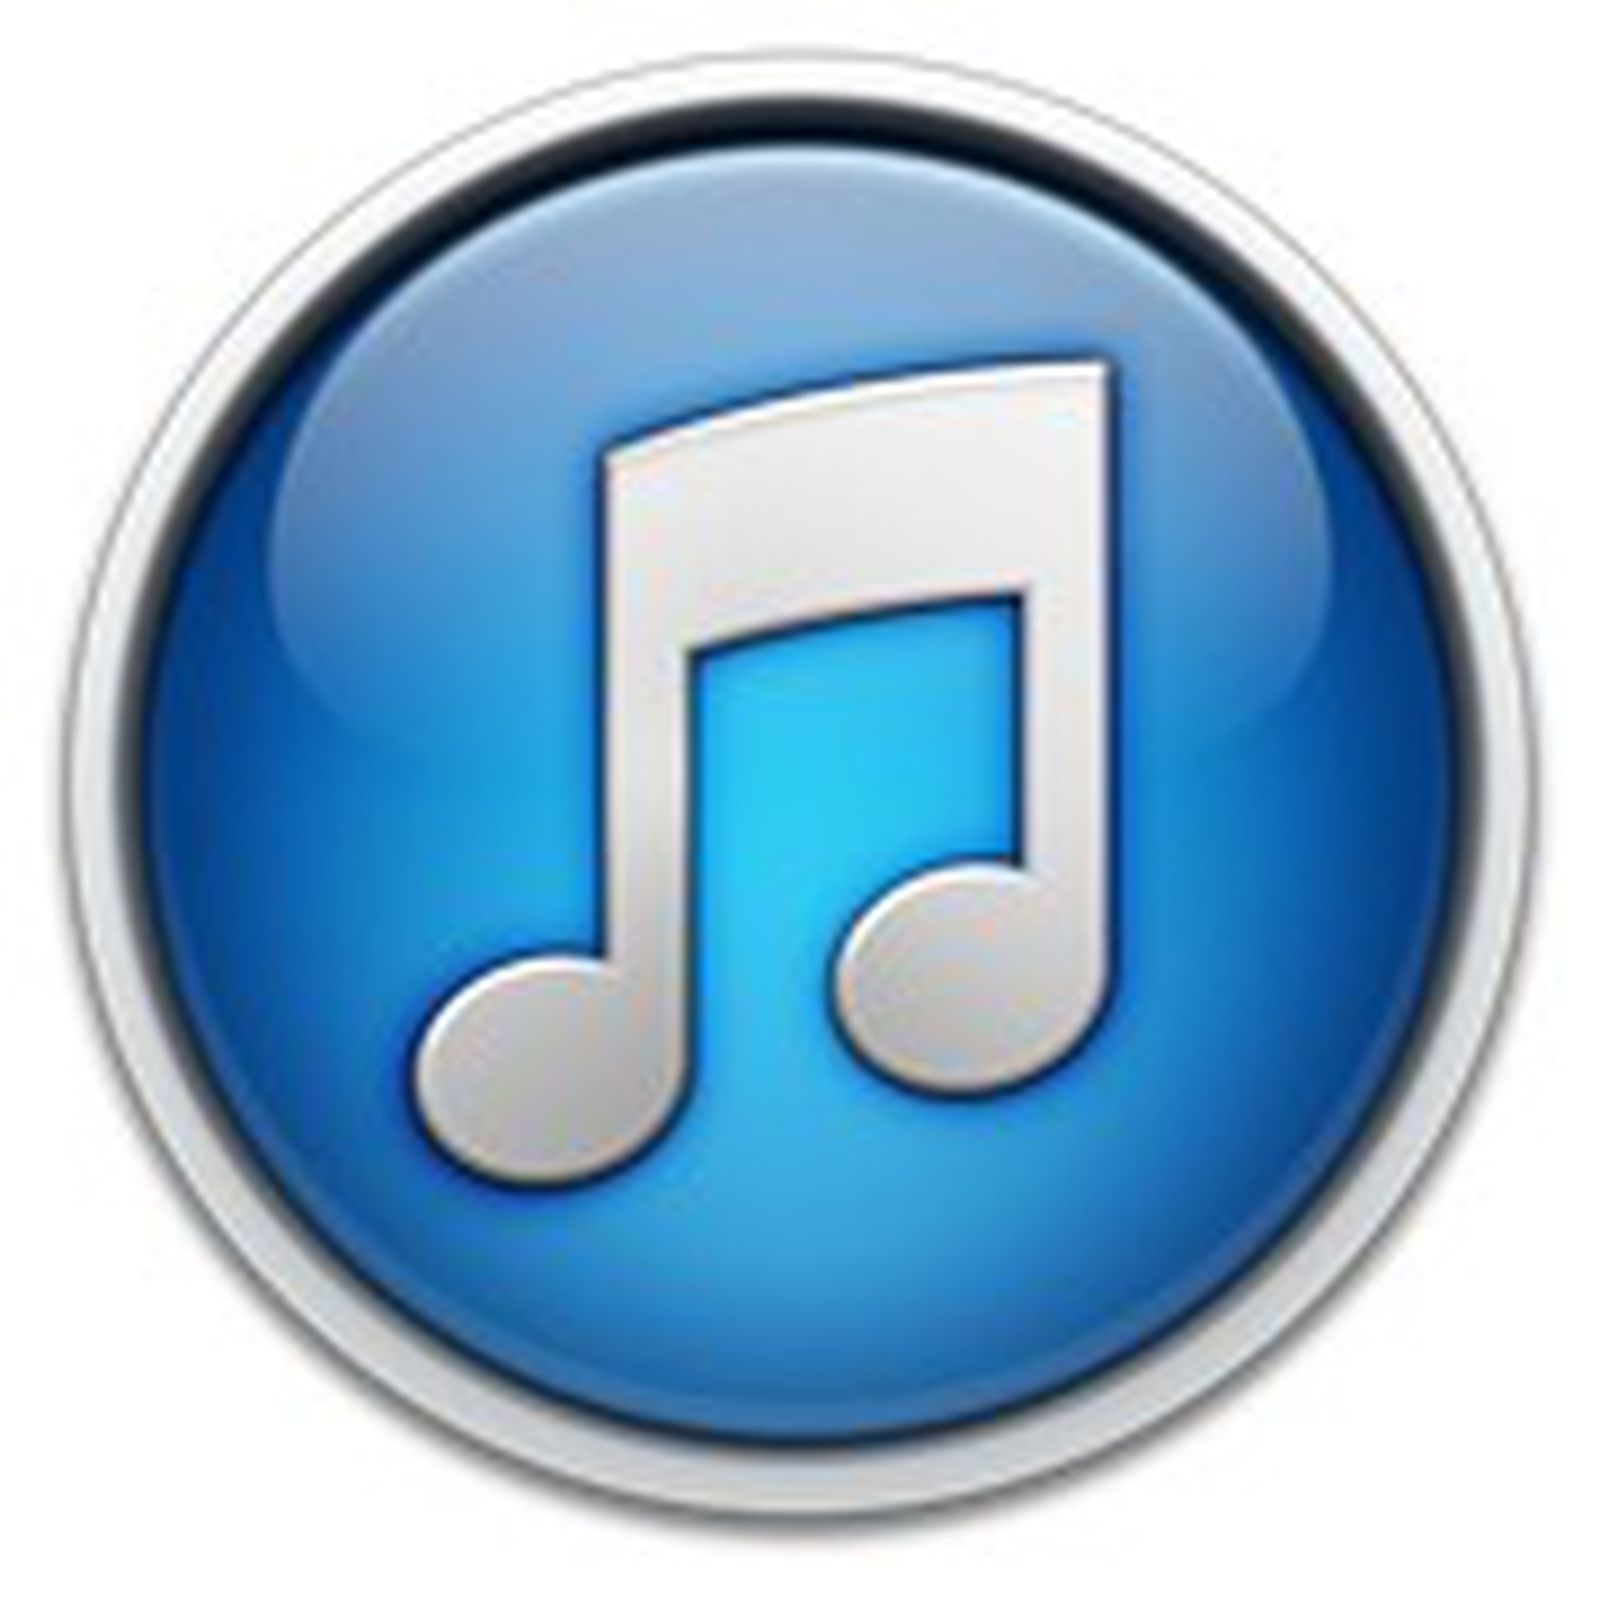 Itunes 11.2 download chip mac nut